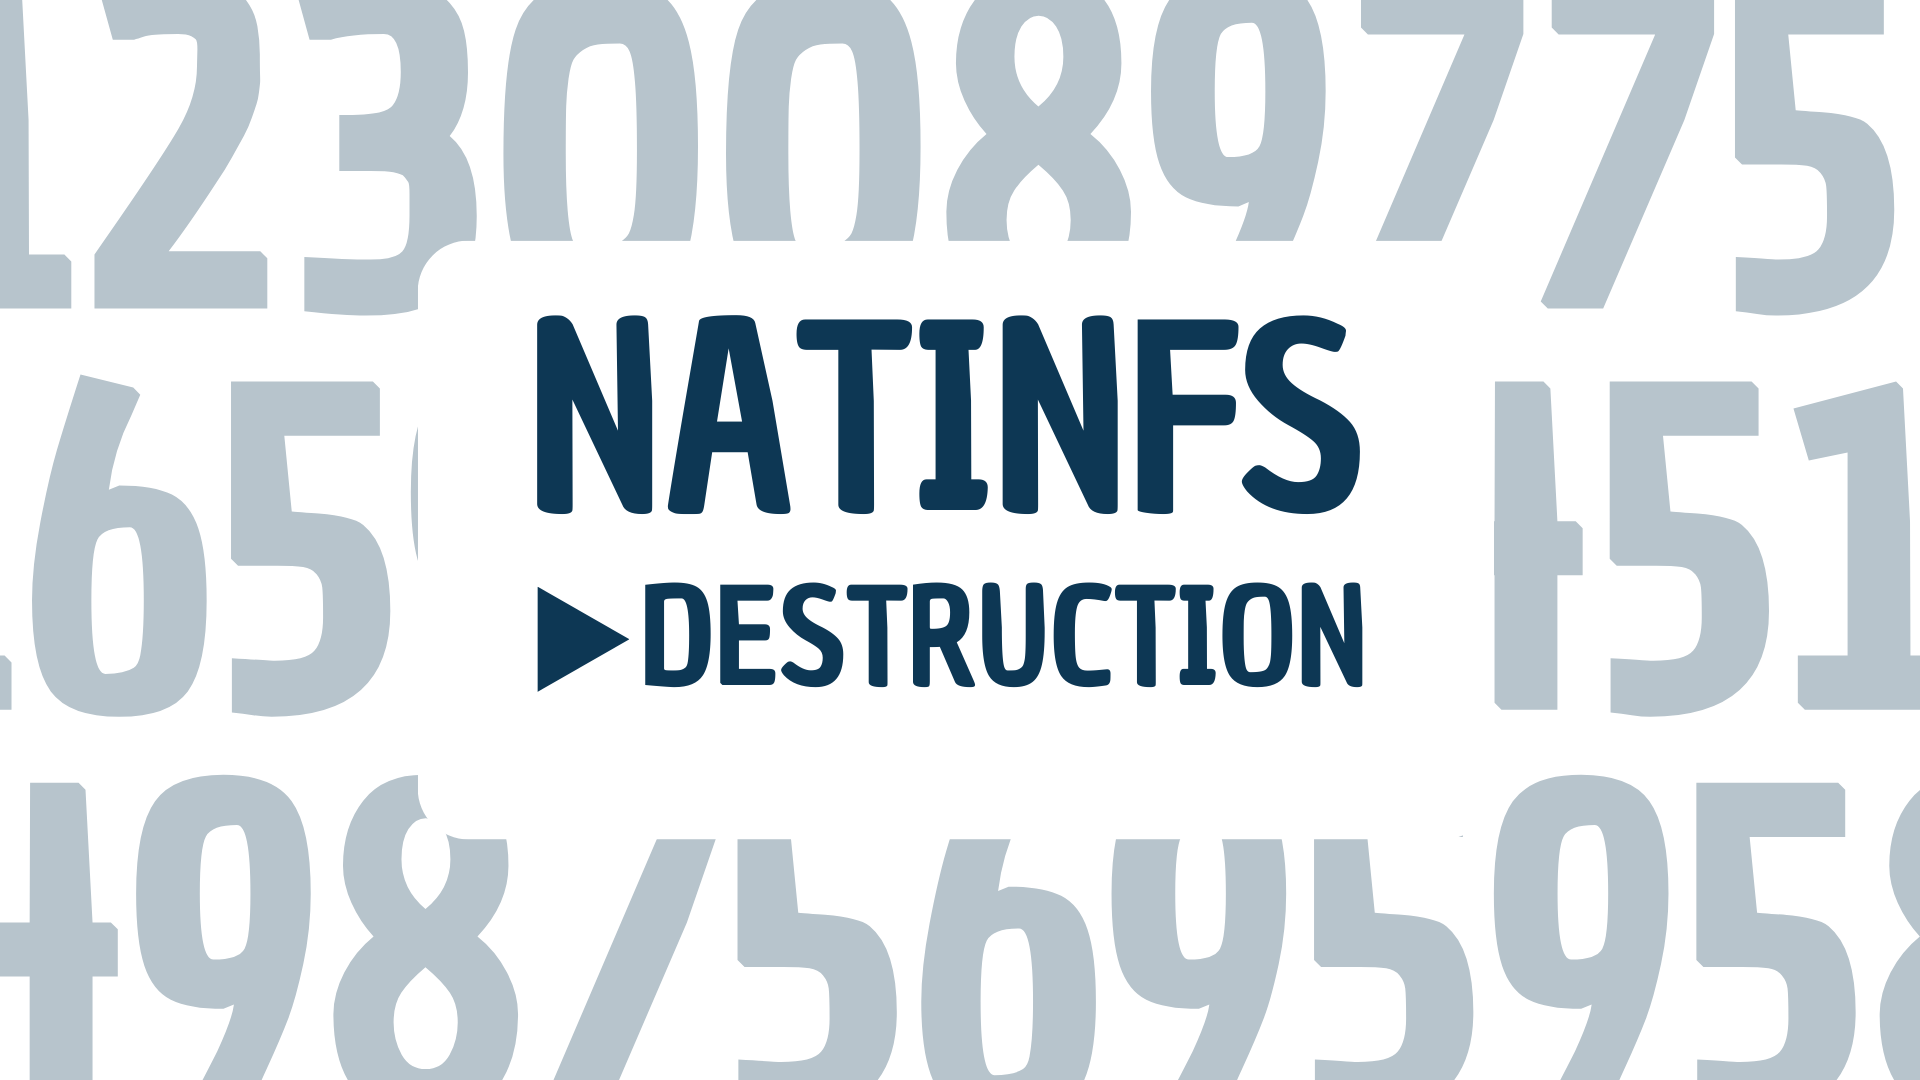 Natinfs destruction